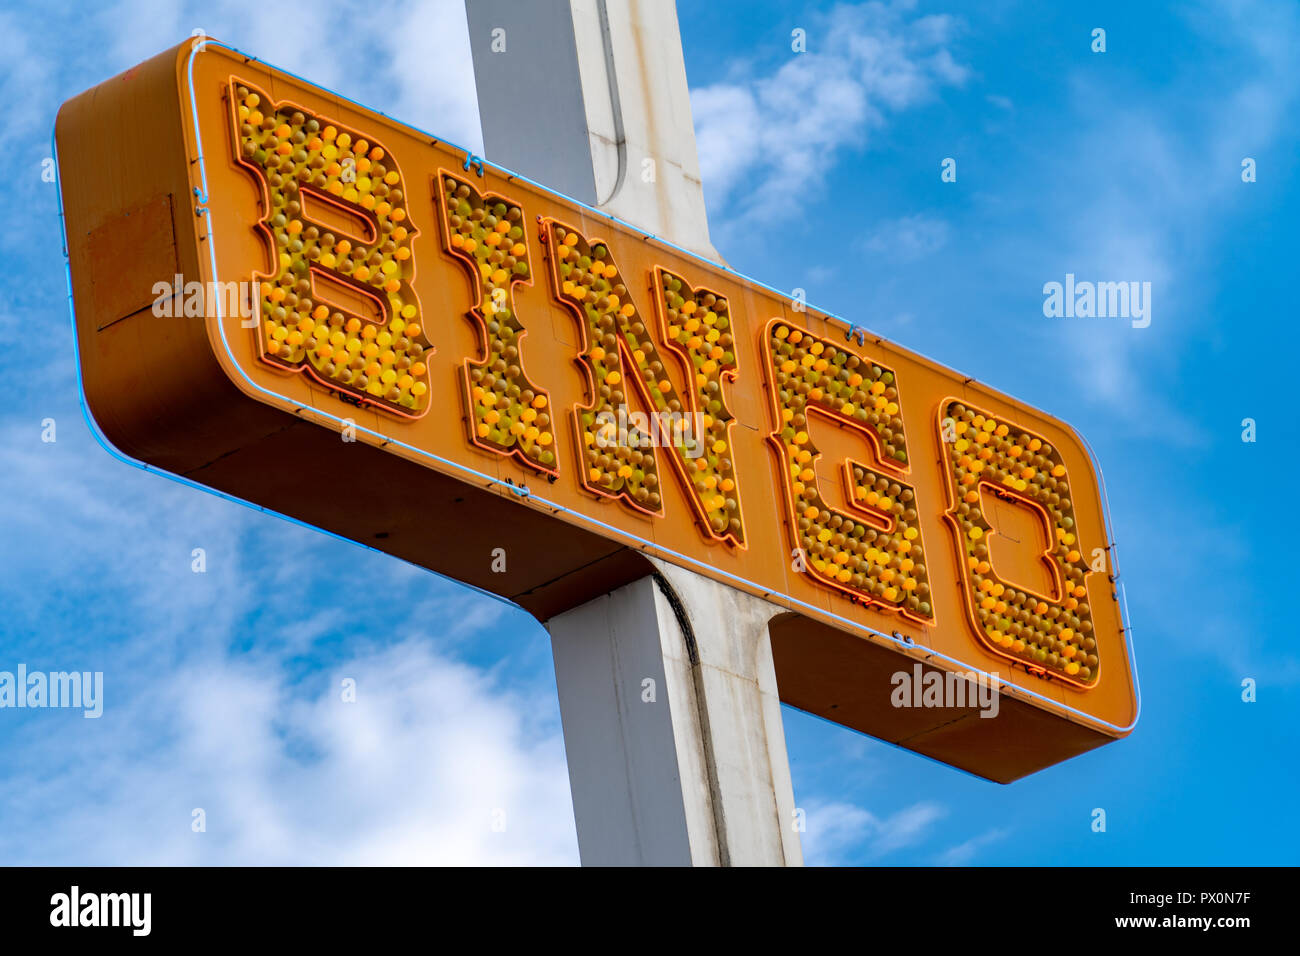 Generic BINGO neon sign in orange lights, unlit, in the daytime against a blue sky Stock Photo